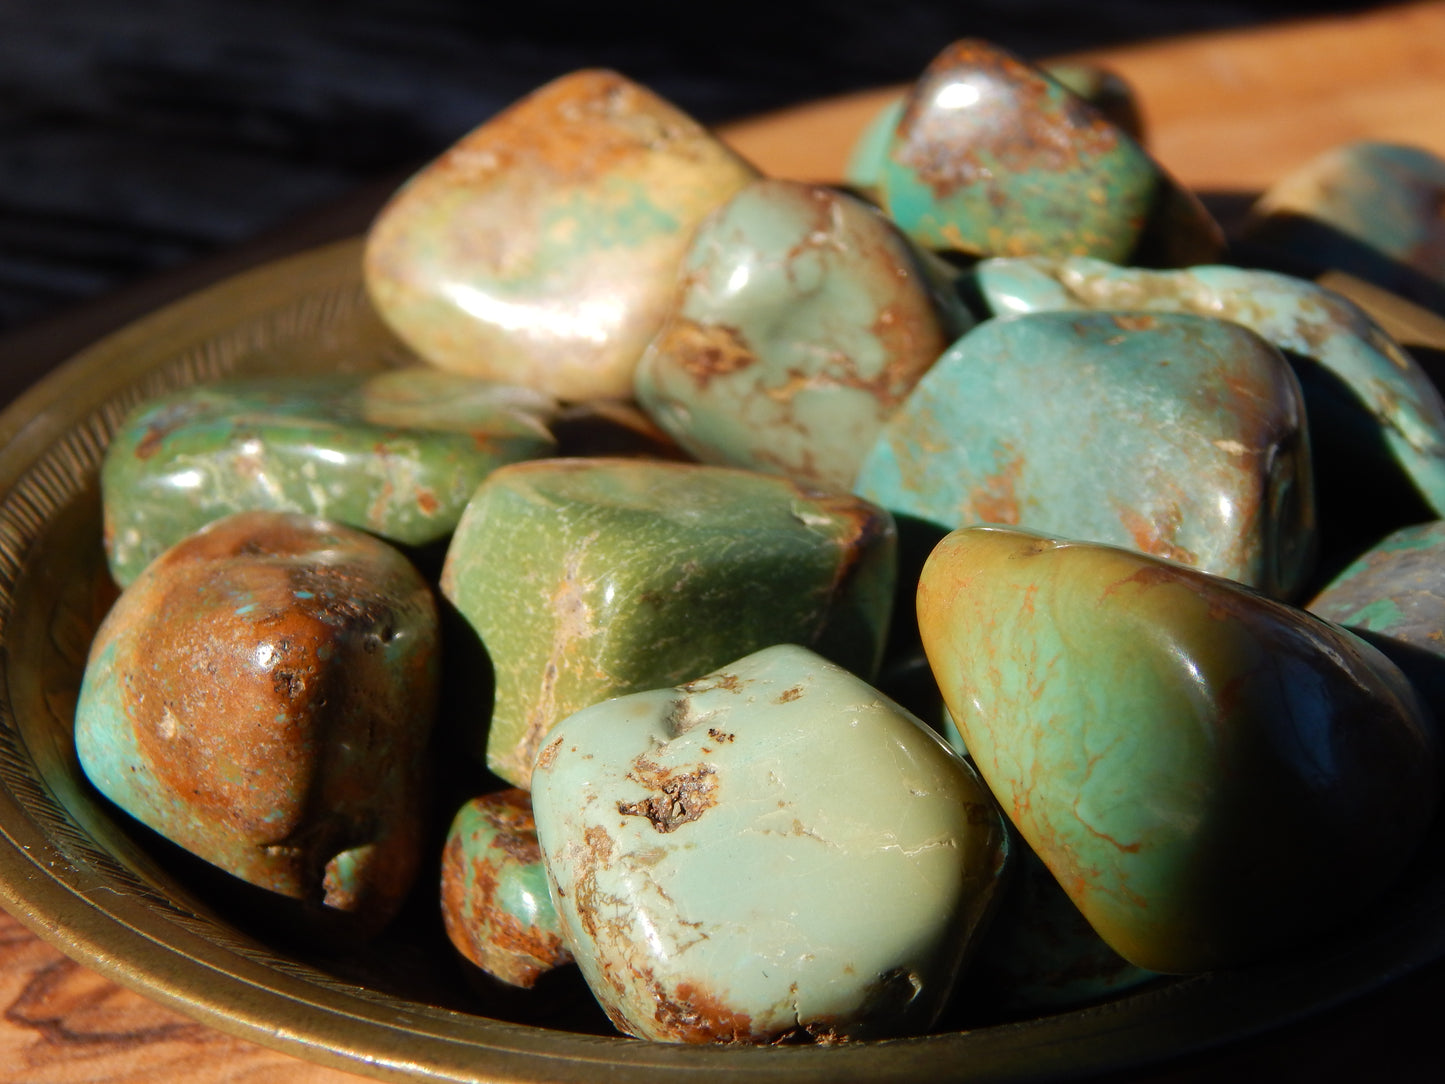 Turquoise Tumbled Stones